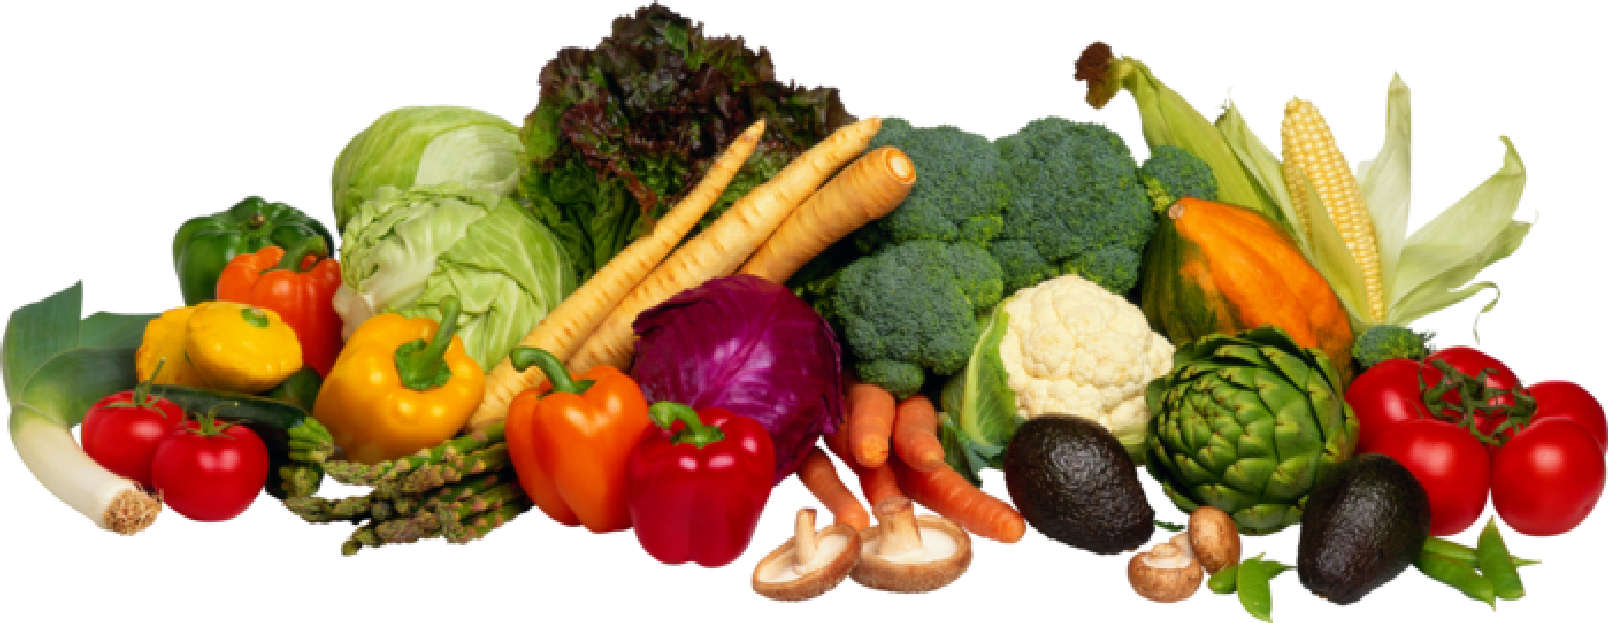 verduras, hortalizas